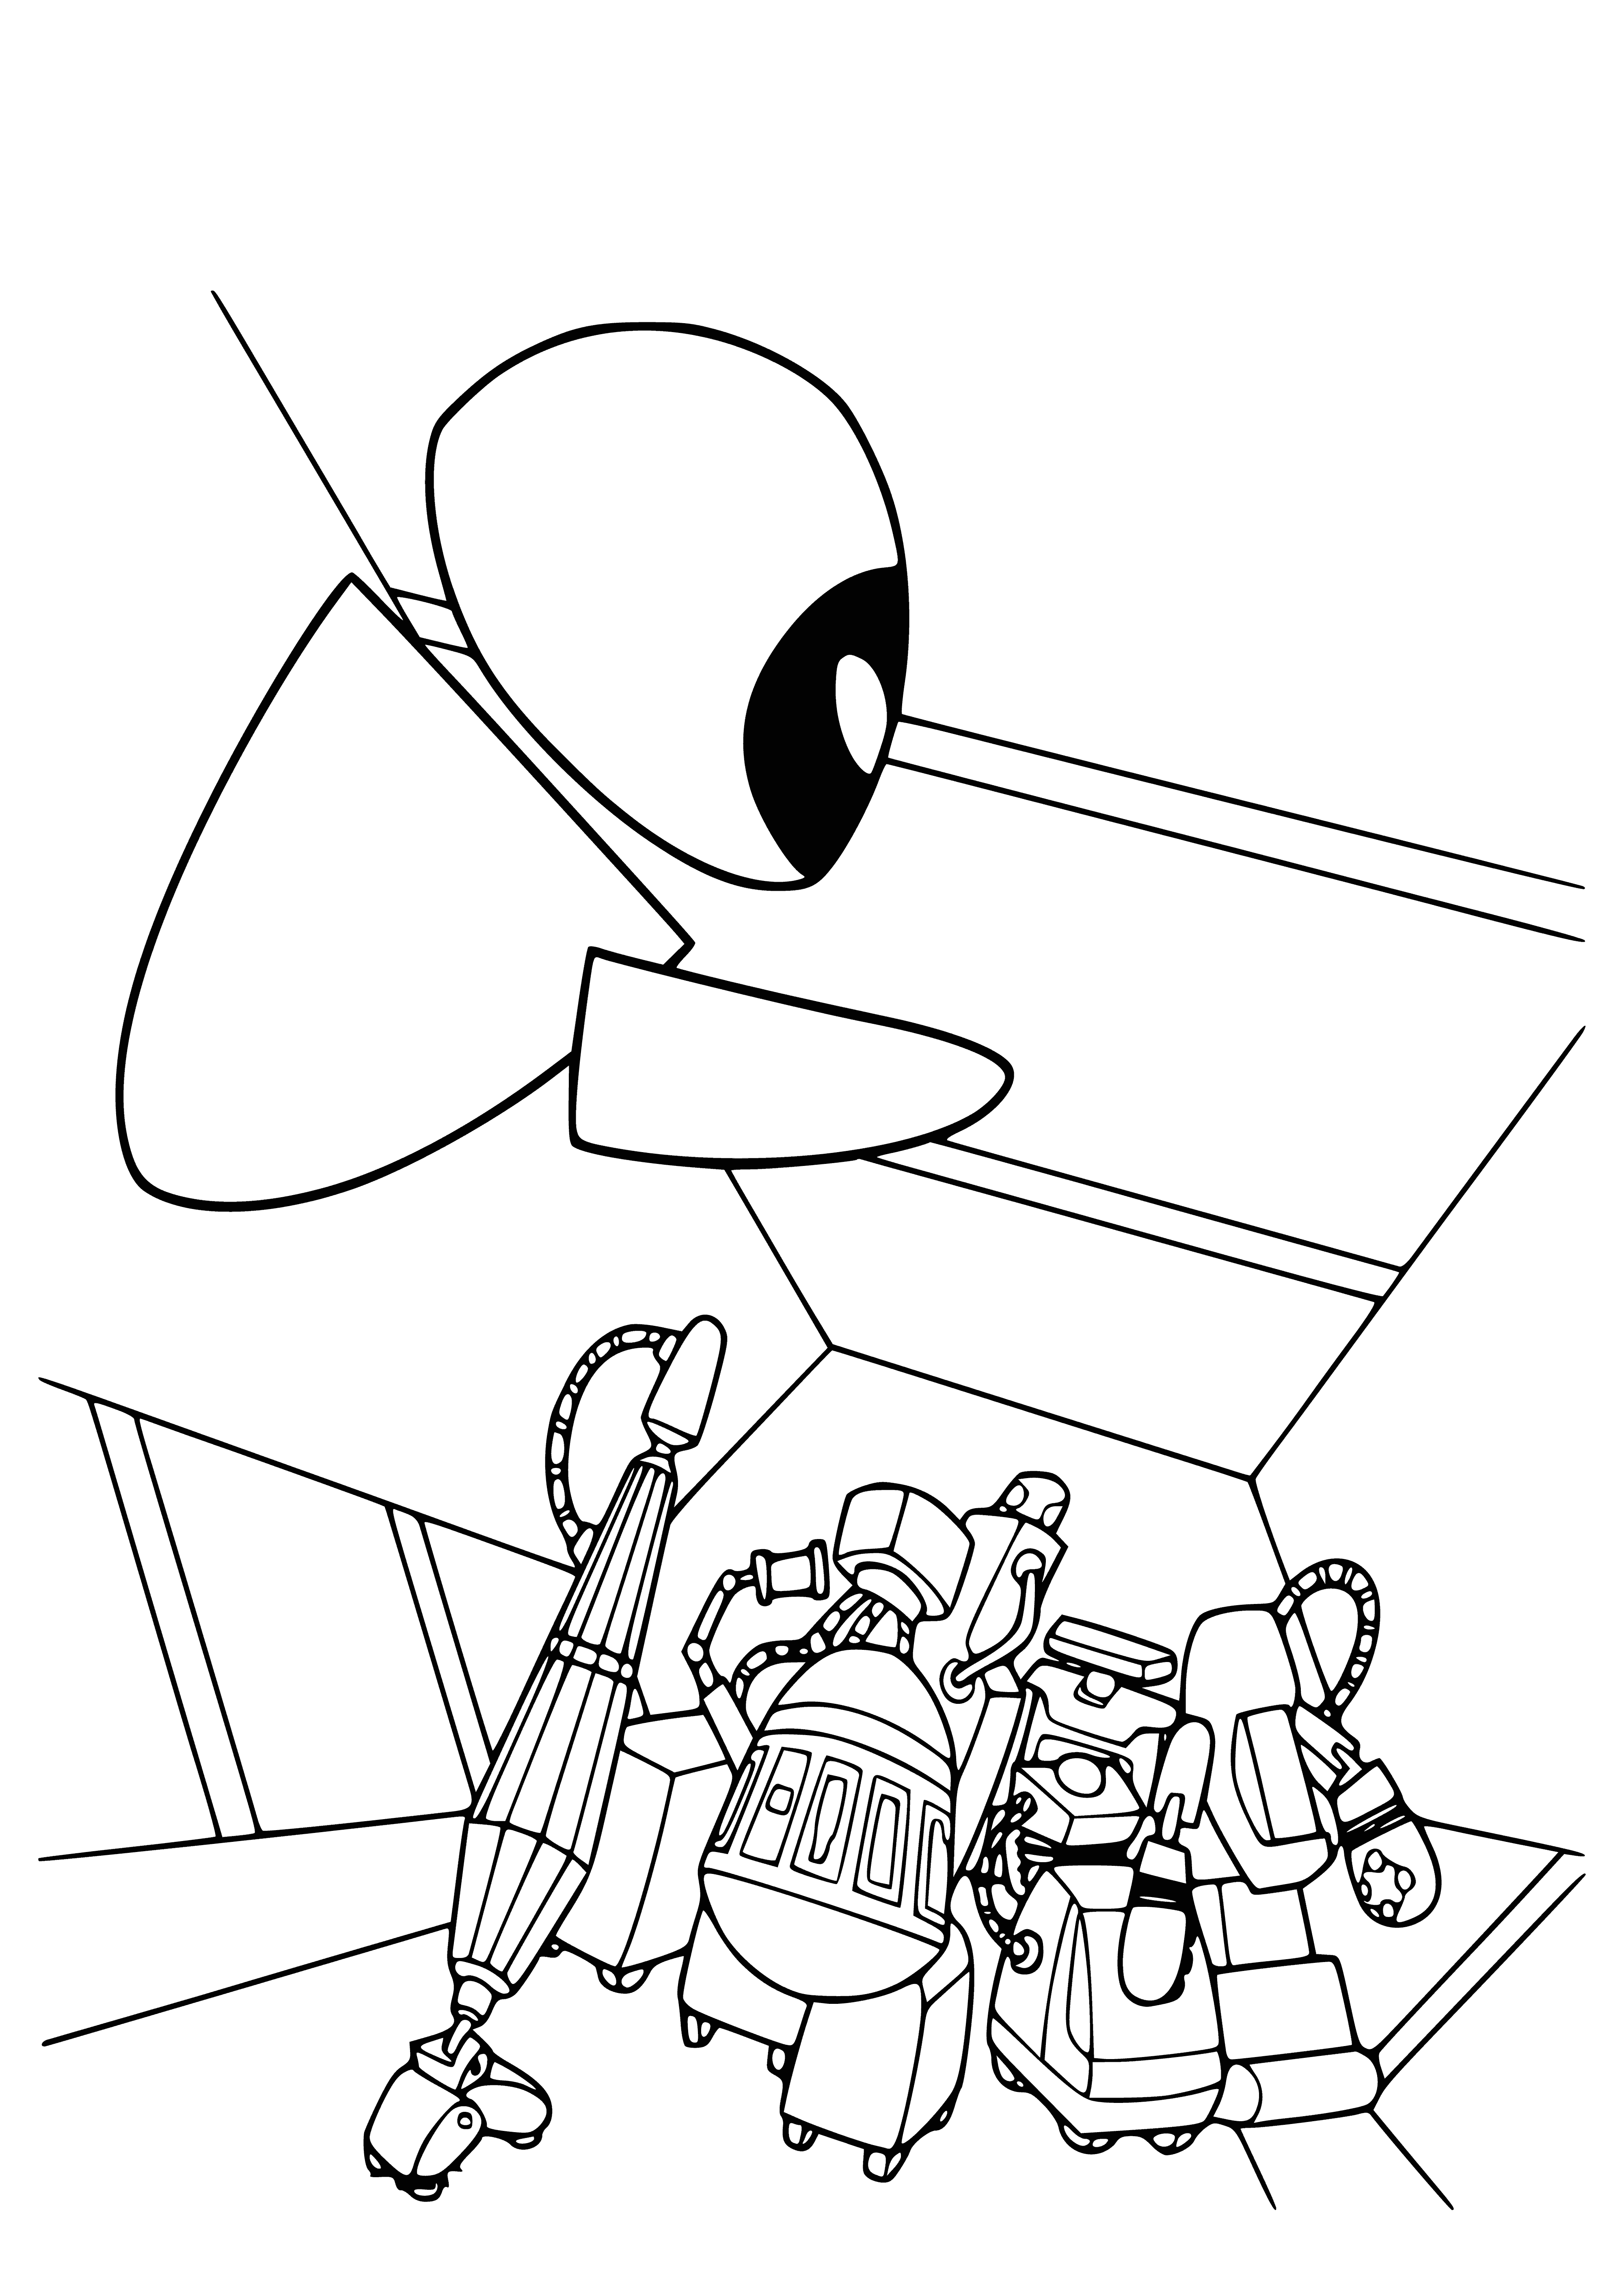 Defective robots coloring page